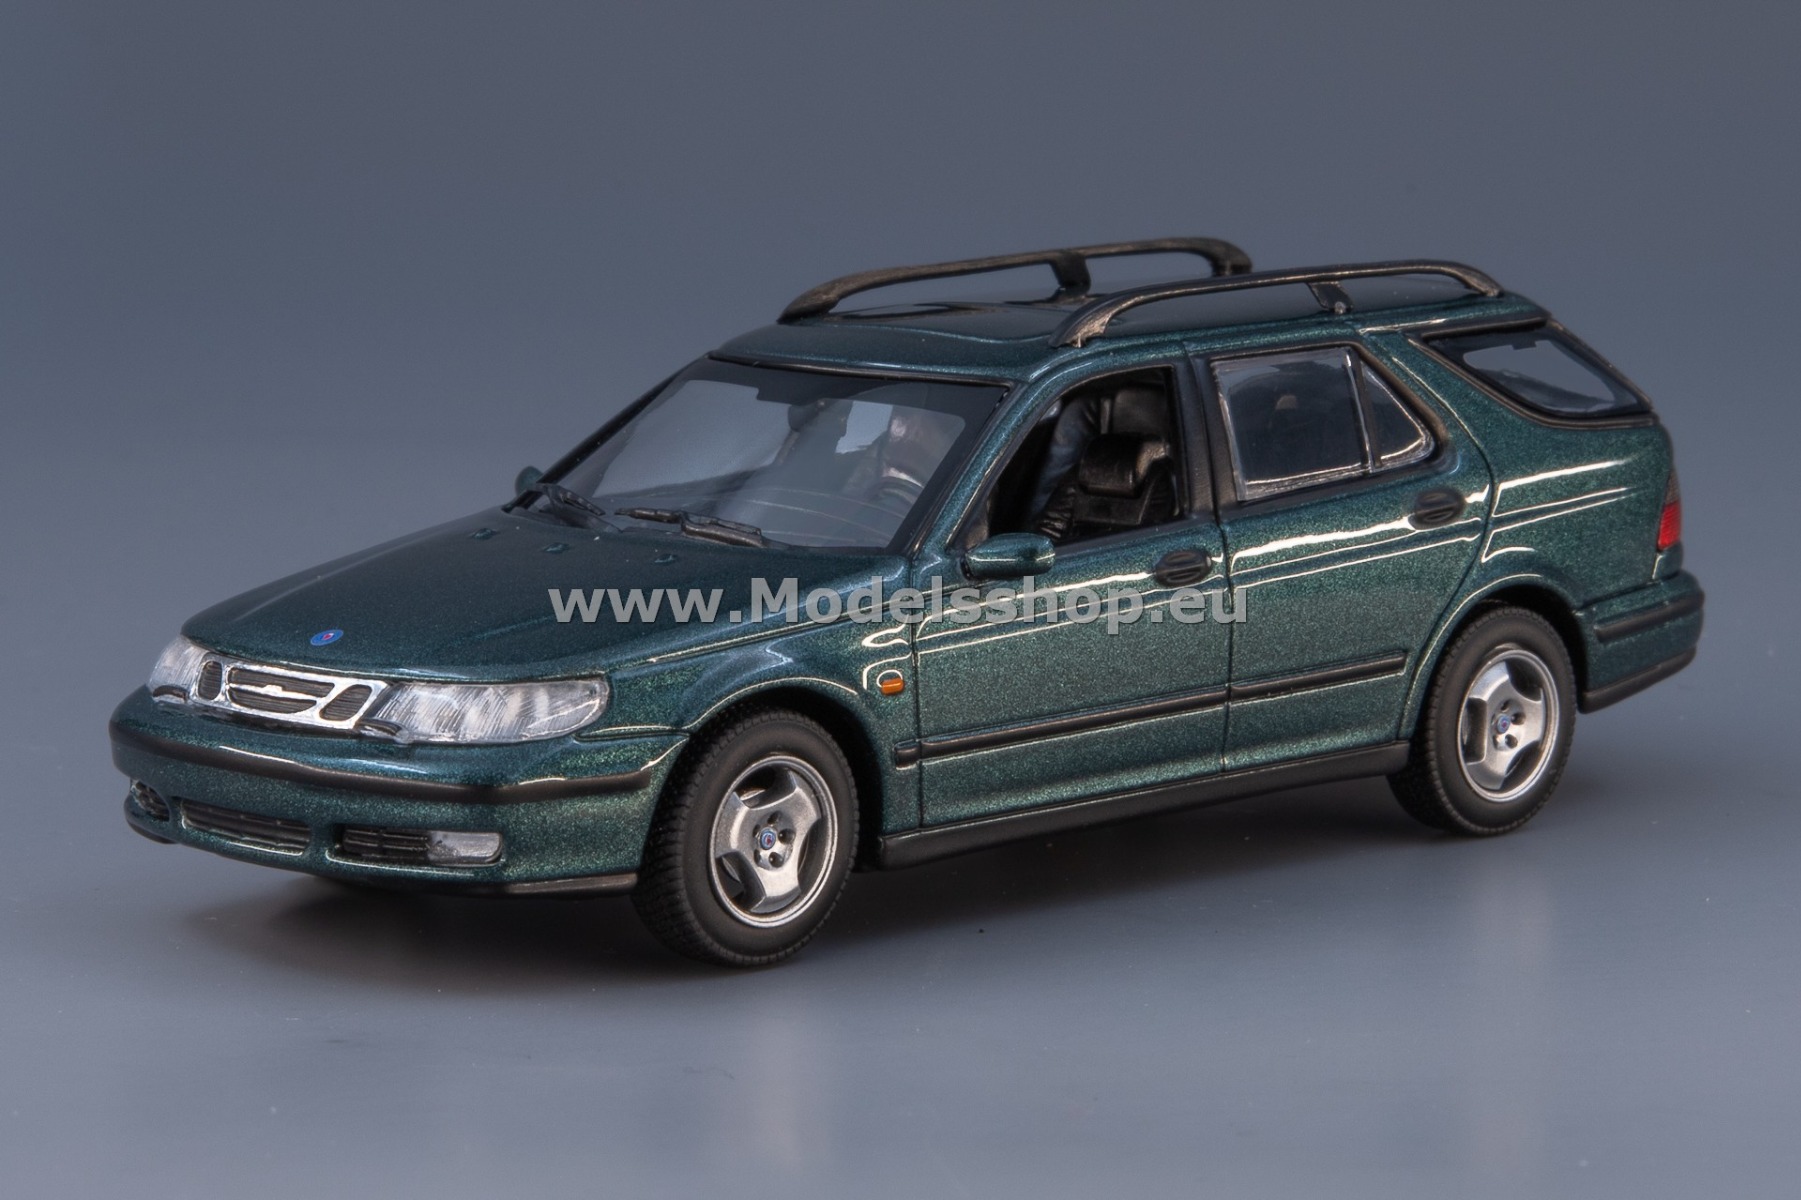 Maxichamps 940170811 Saab 9-5 Break, 1999 /dark green metallic/